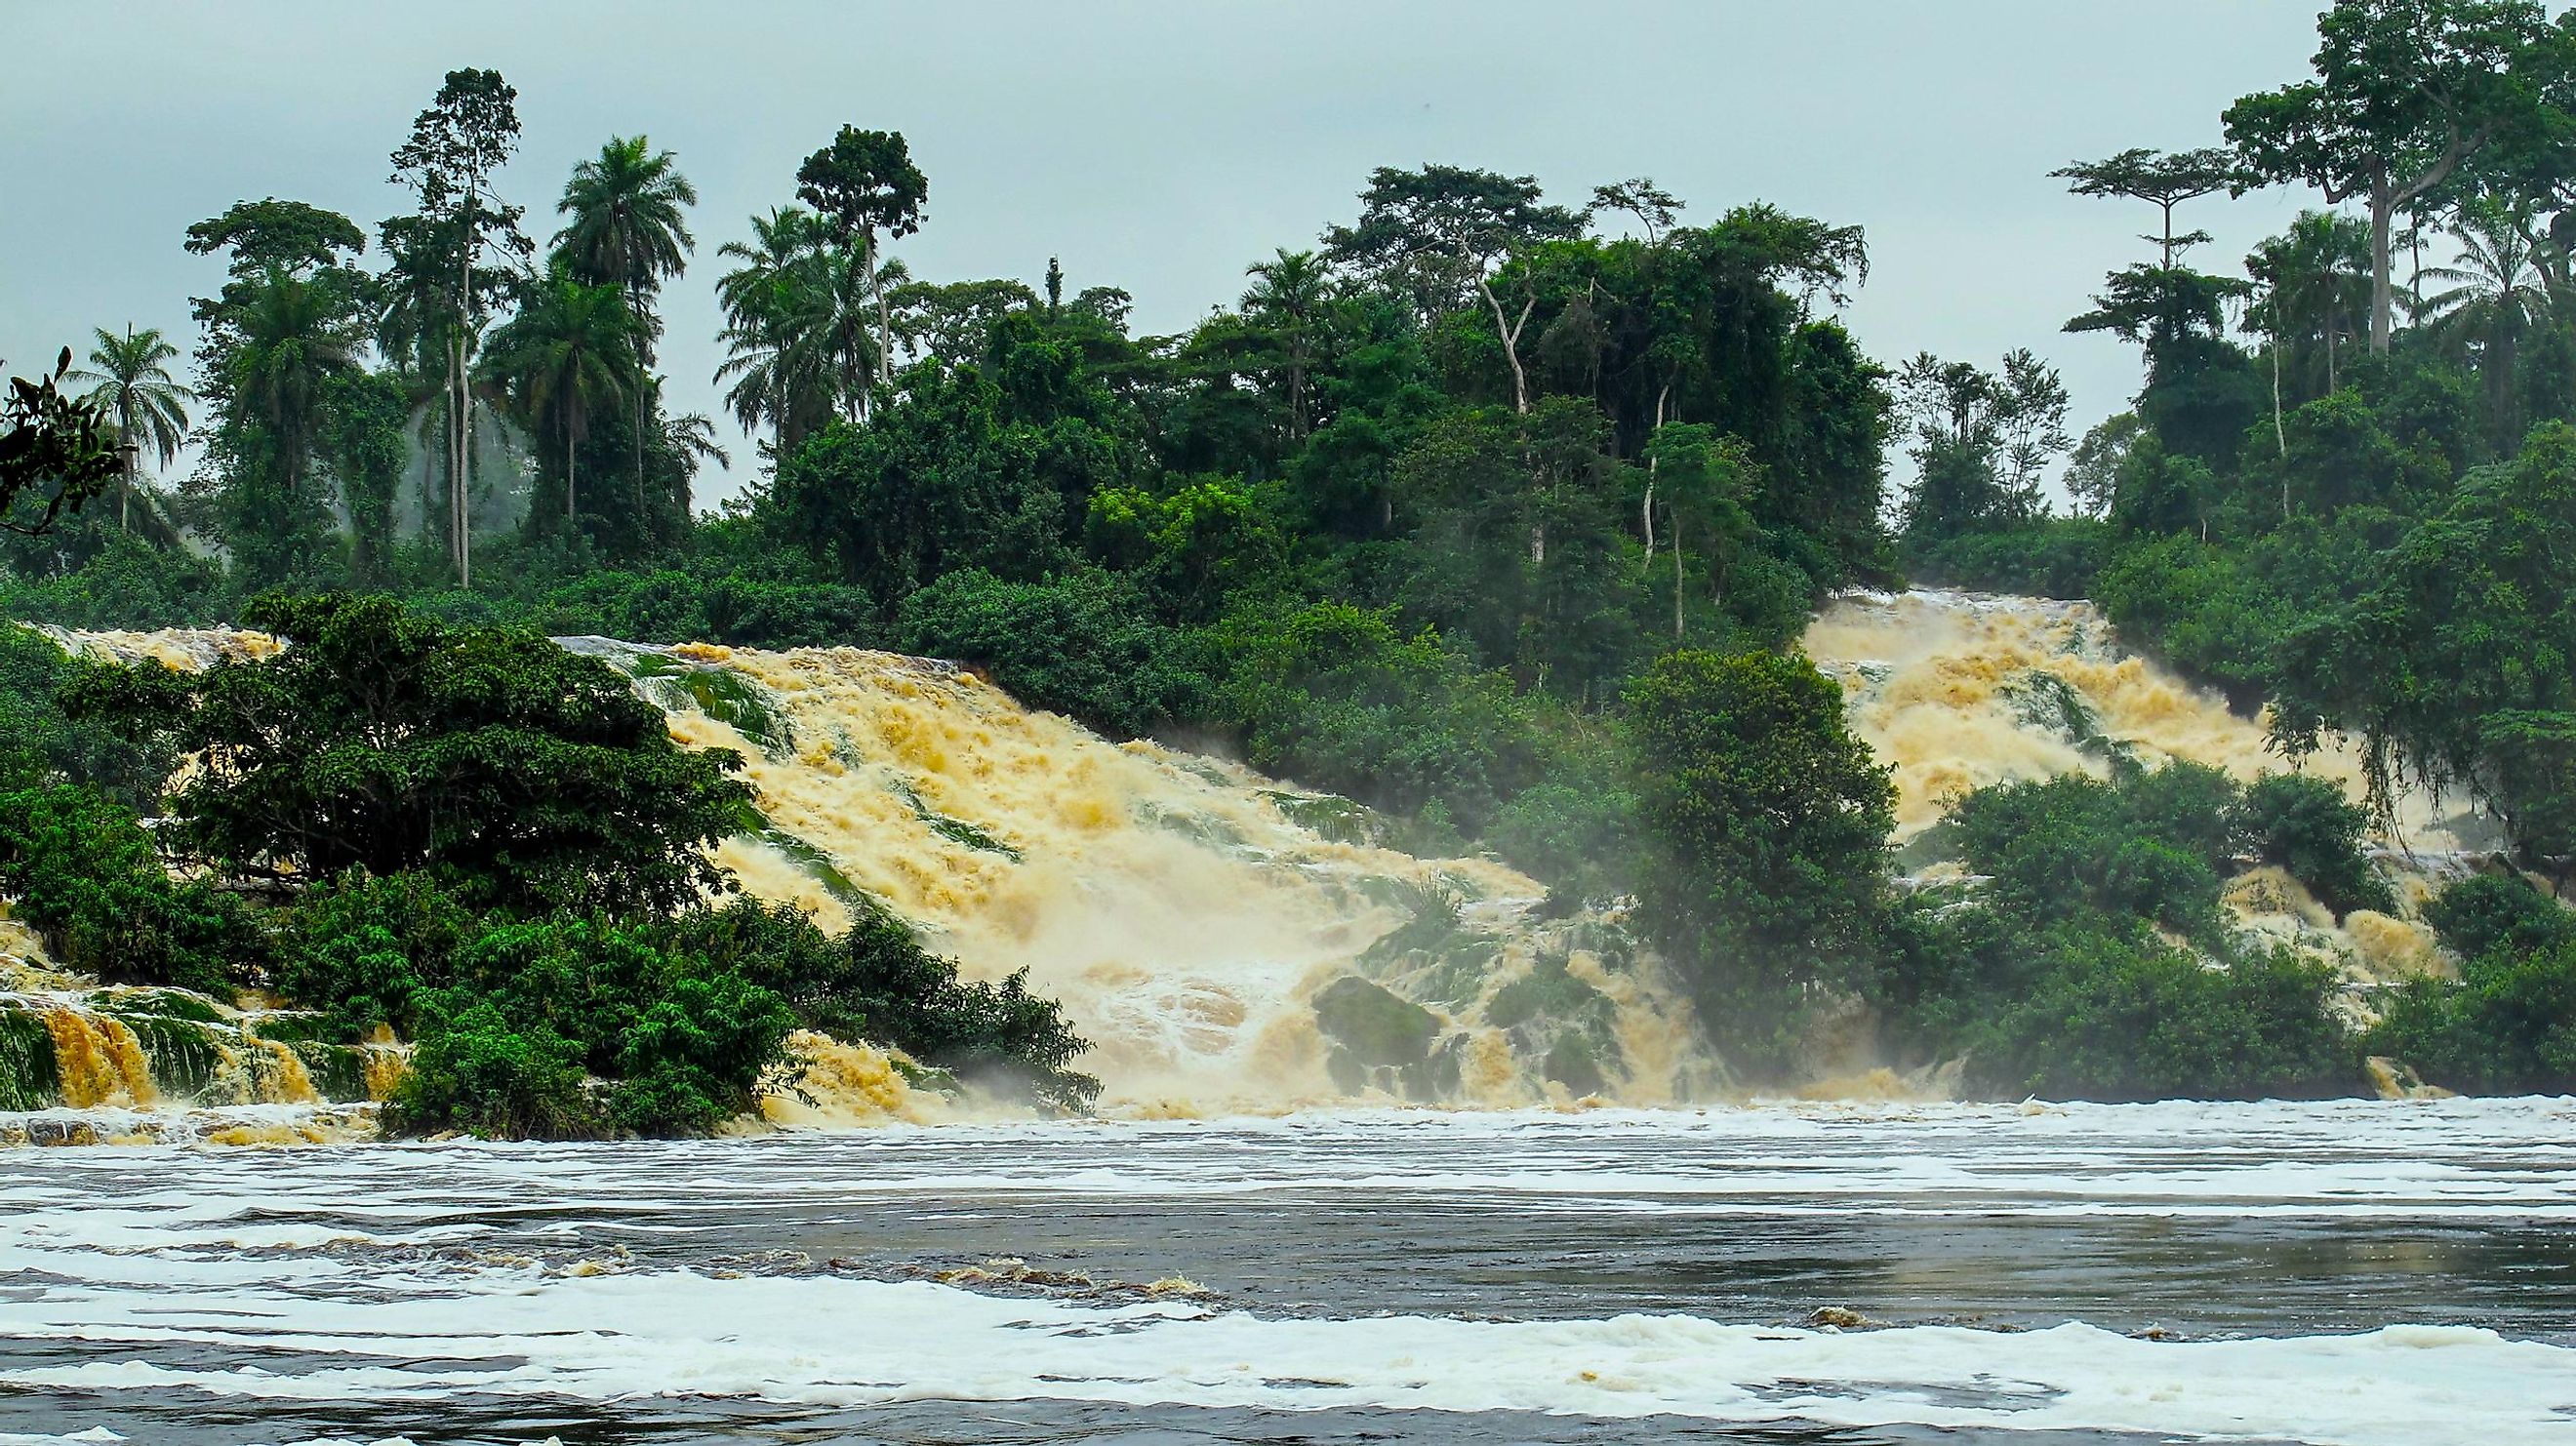 Kongou falls in Gabon on the Ivindo River. Image credit: Photo by Nathalie van Vliet/CIFOR